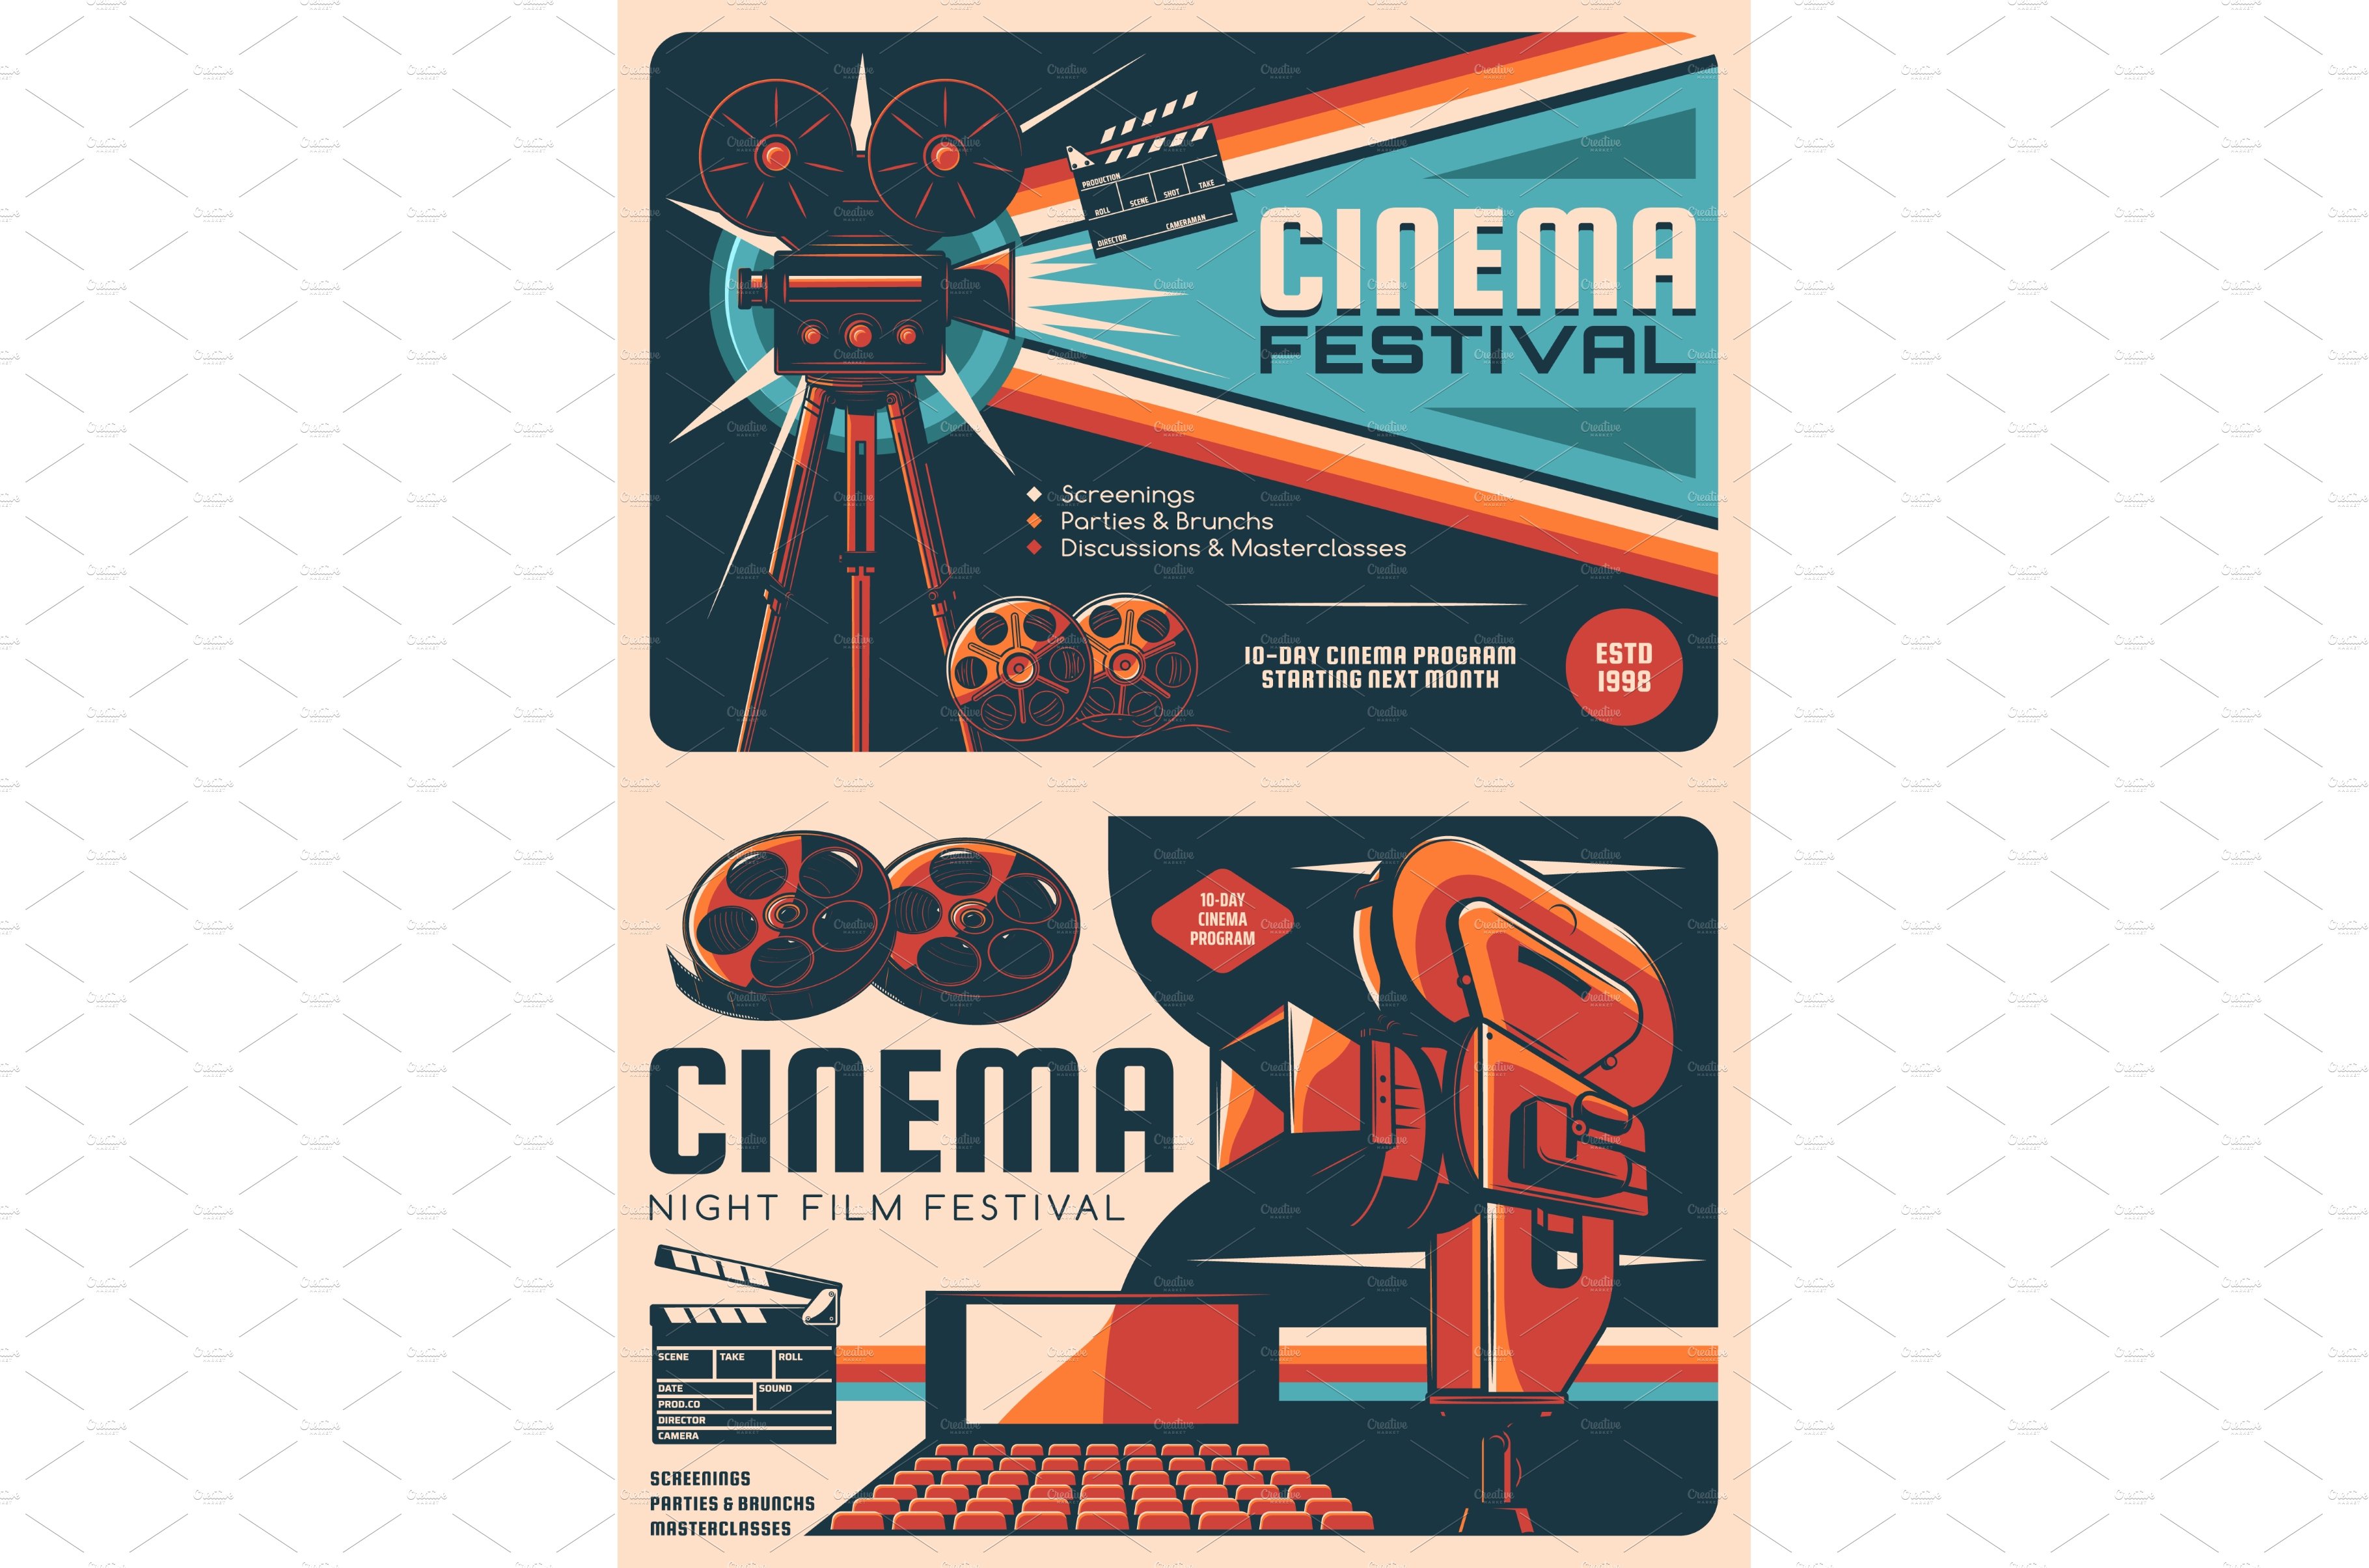 Movie film festival retro posters cover image.